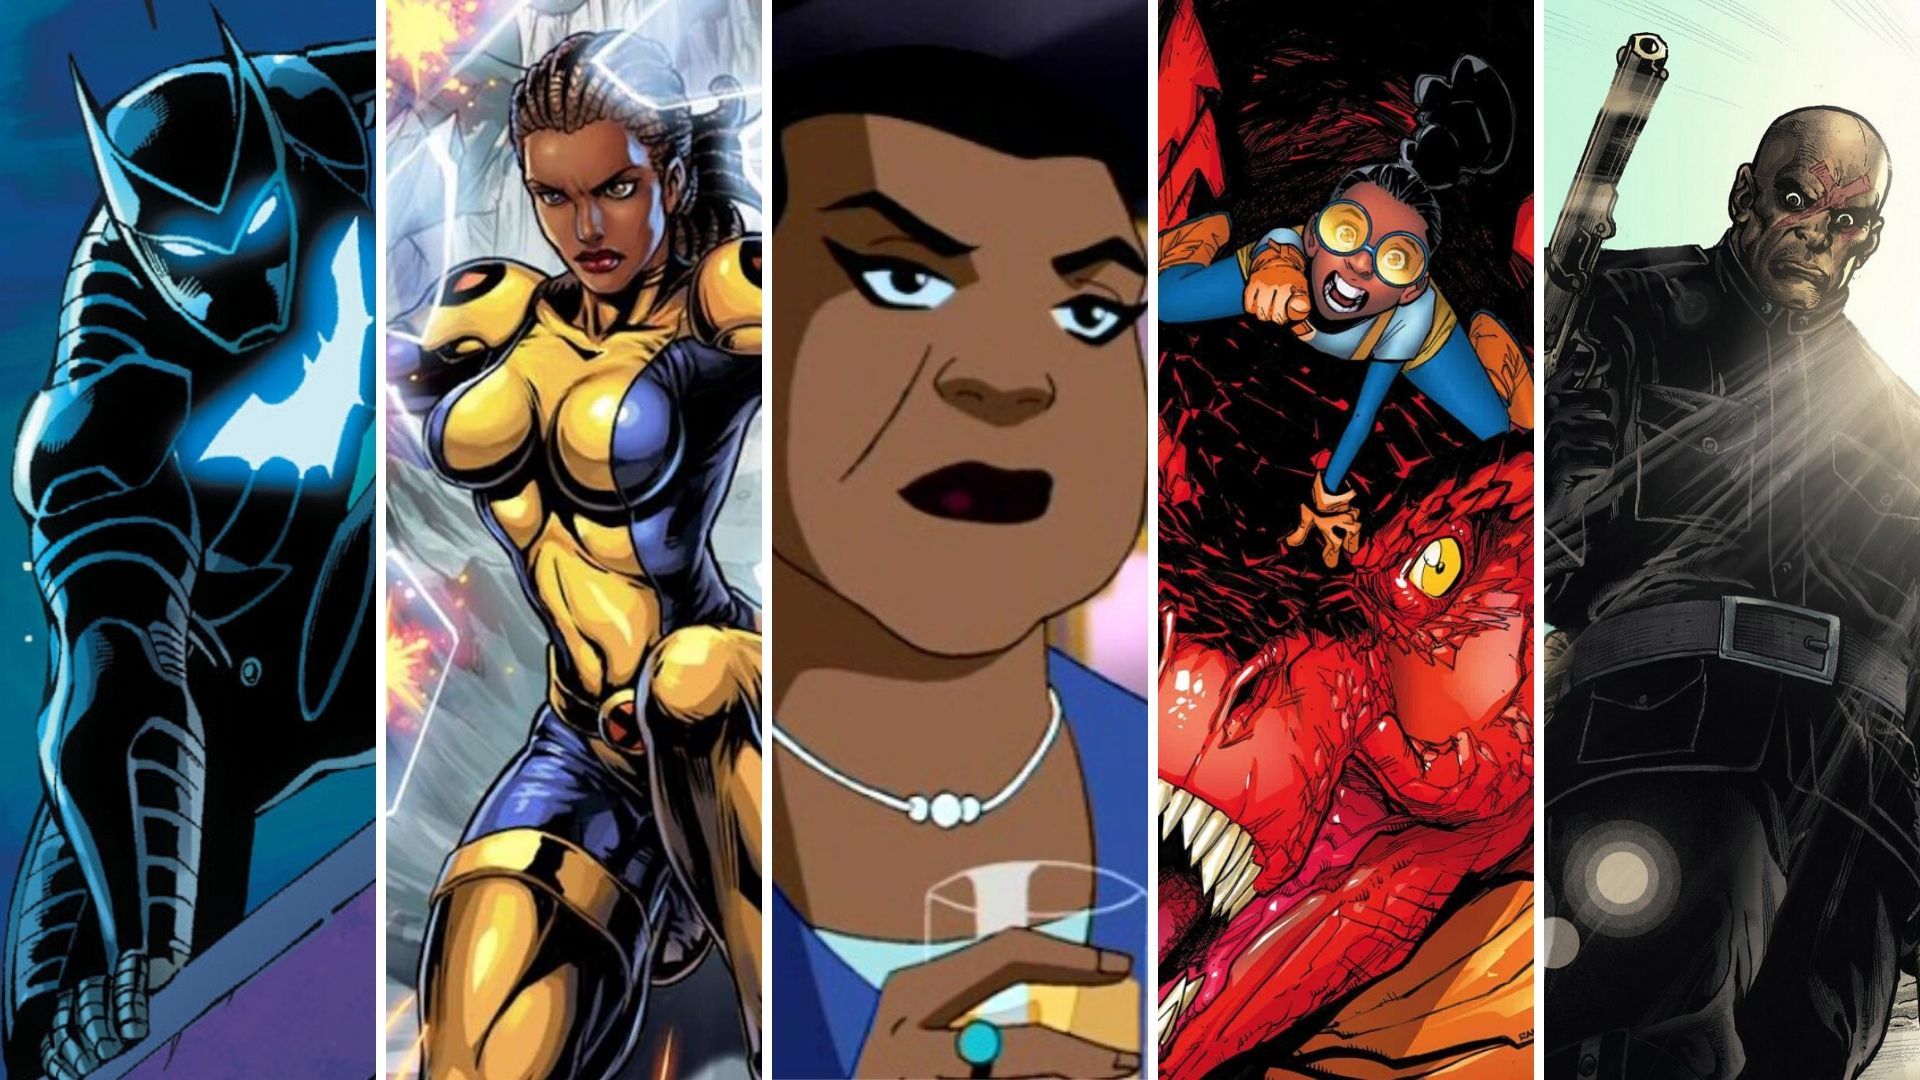 10 Badass Black Superheroes Everyone Should Know